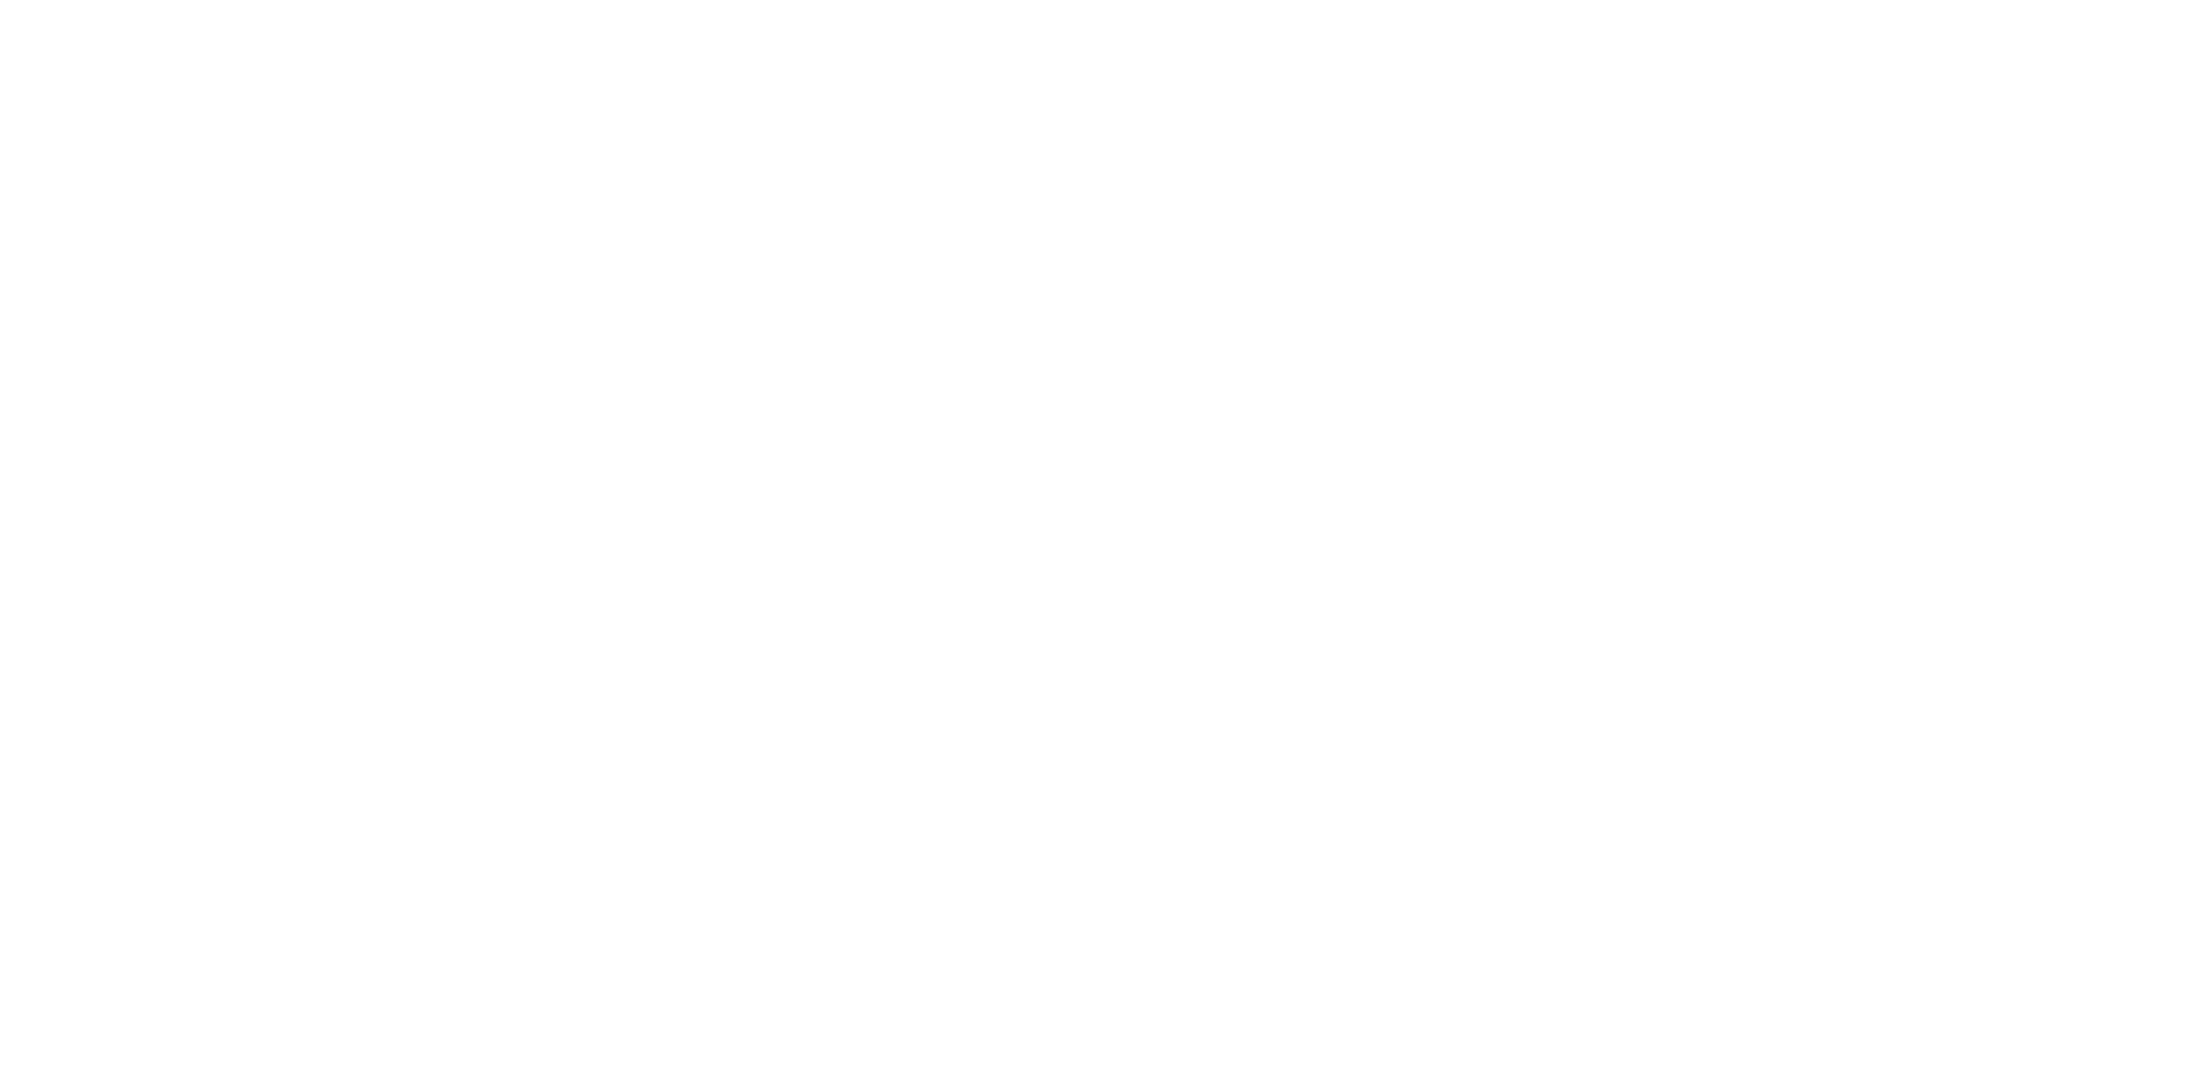 Matthew Patrick for Wirral West